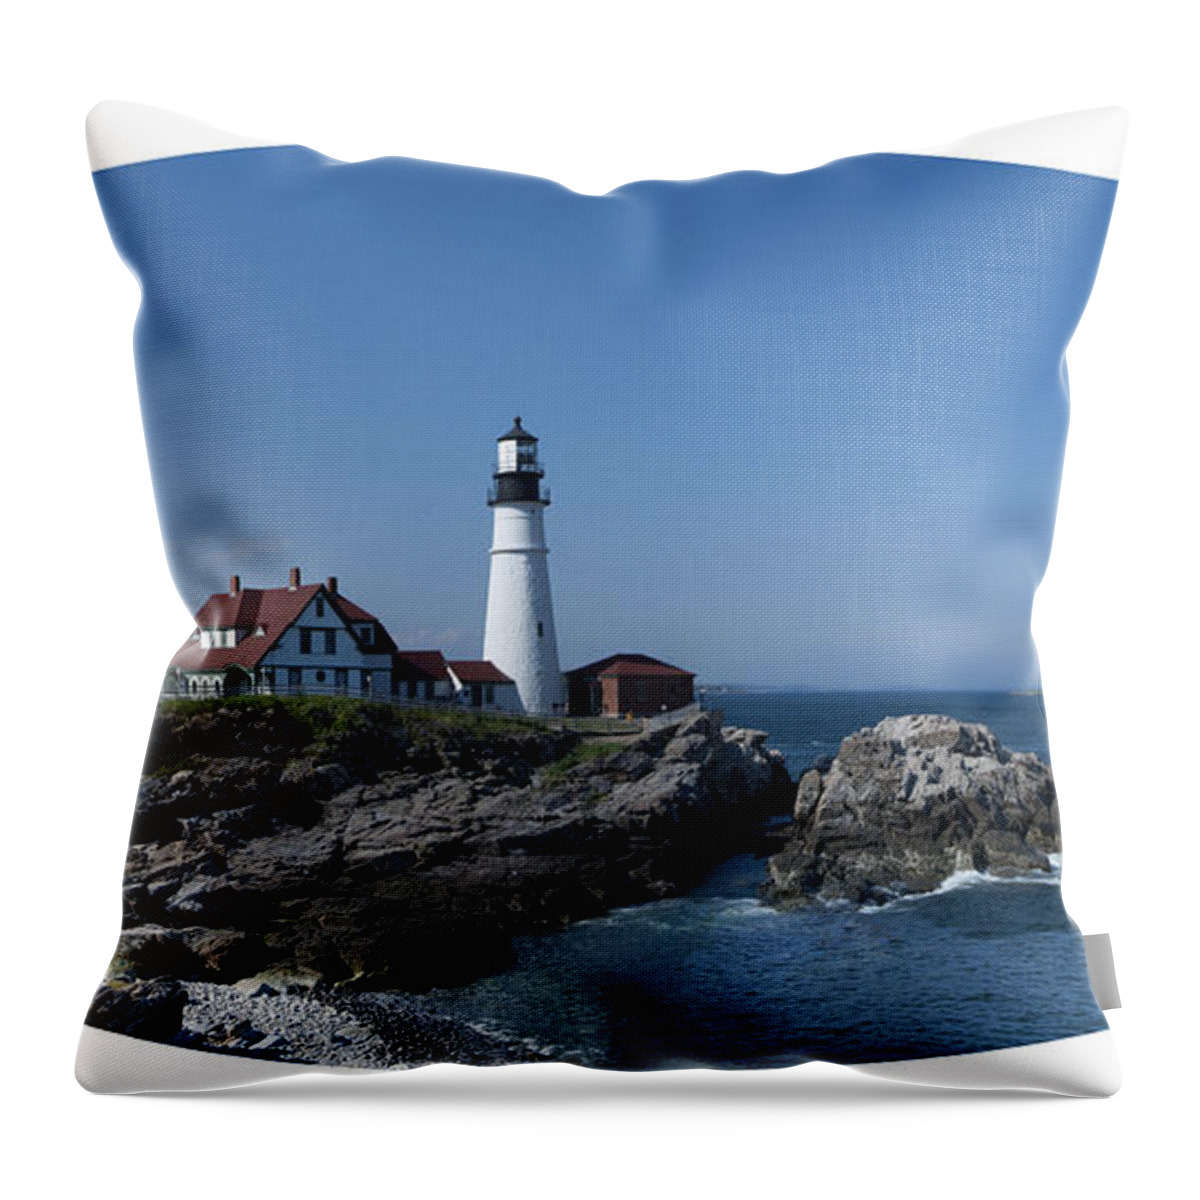 Portland Head Light House Throw Pillow featuring the photograph Portland Head Light House by Daniel Hebard